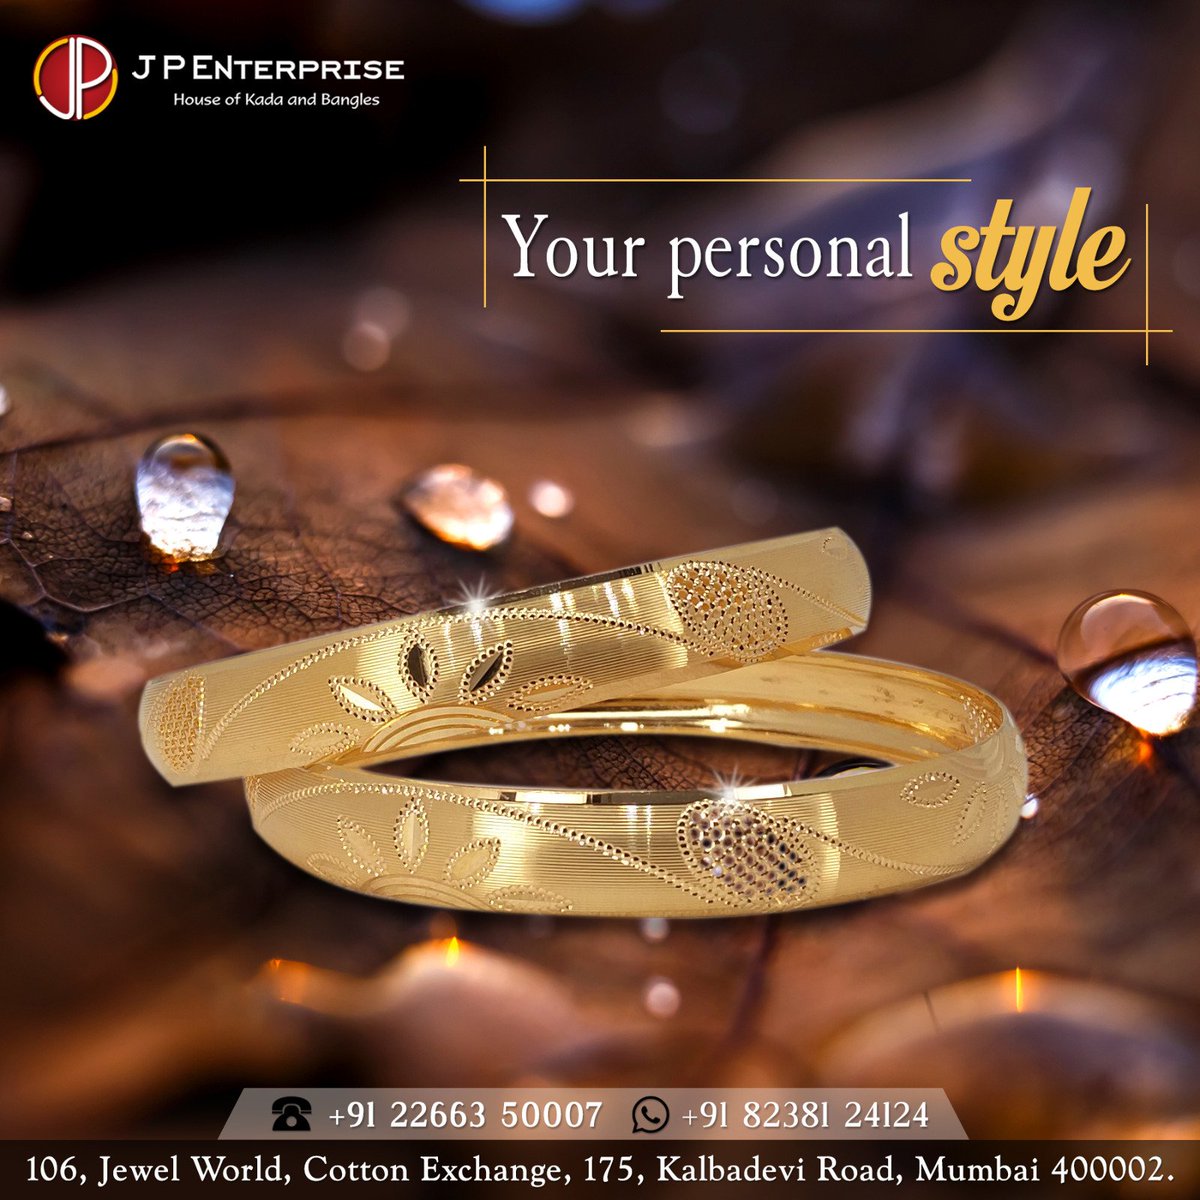 Presenting stunning gold bangles to enhance your style. 

#goldkada #beautifuljewellery #royaljewellery #goldkangan #goldjewellery #bangles #goldbangles  #classicjewellery #indianjewellery #indianjeweller